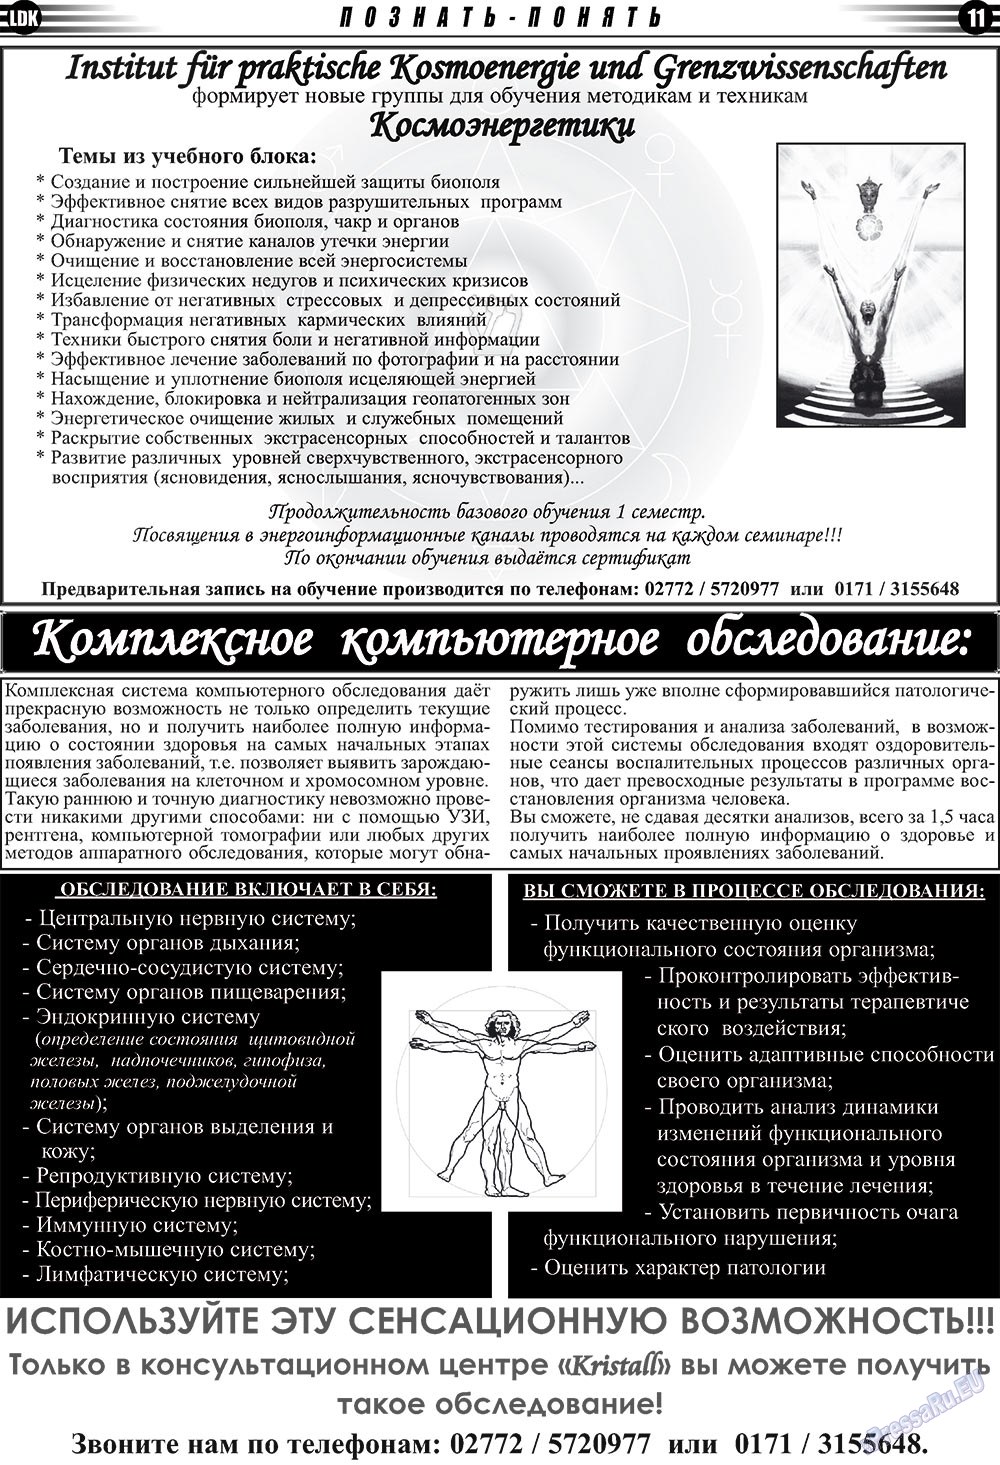 LDK по-русски, газета. 2009 №2 стр.11